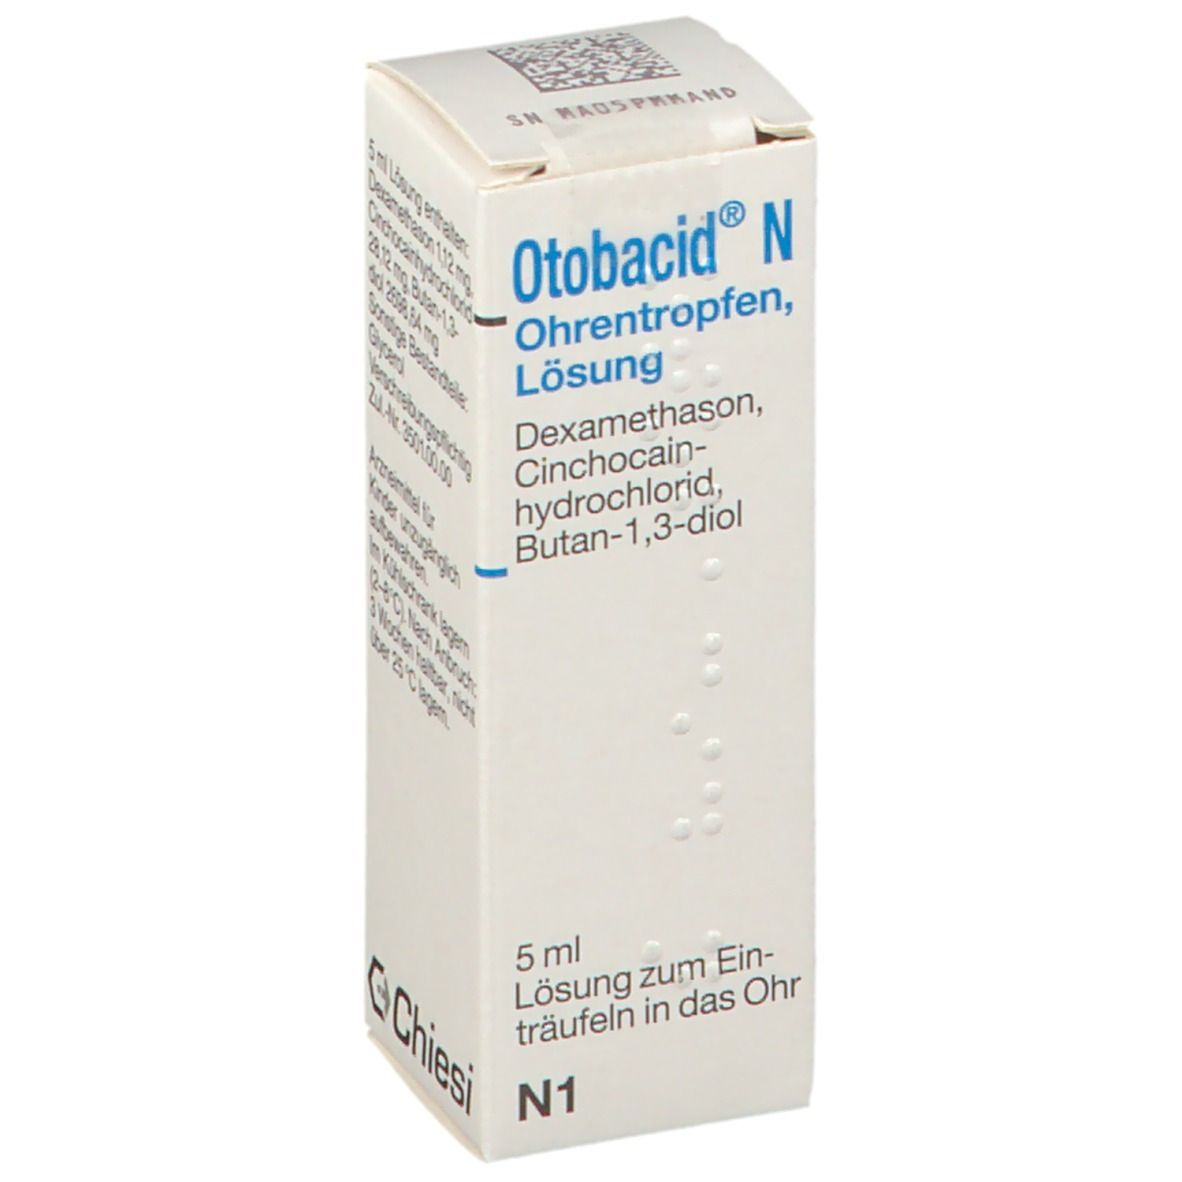 Otobacid® N